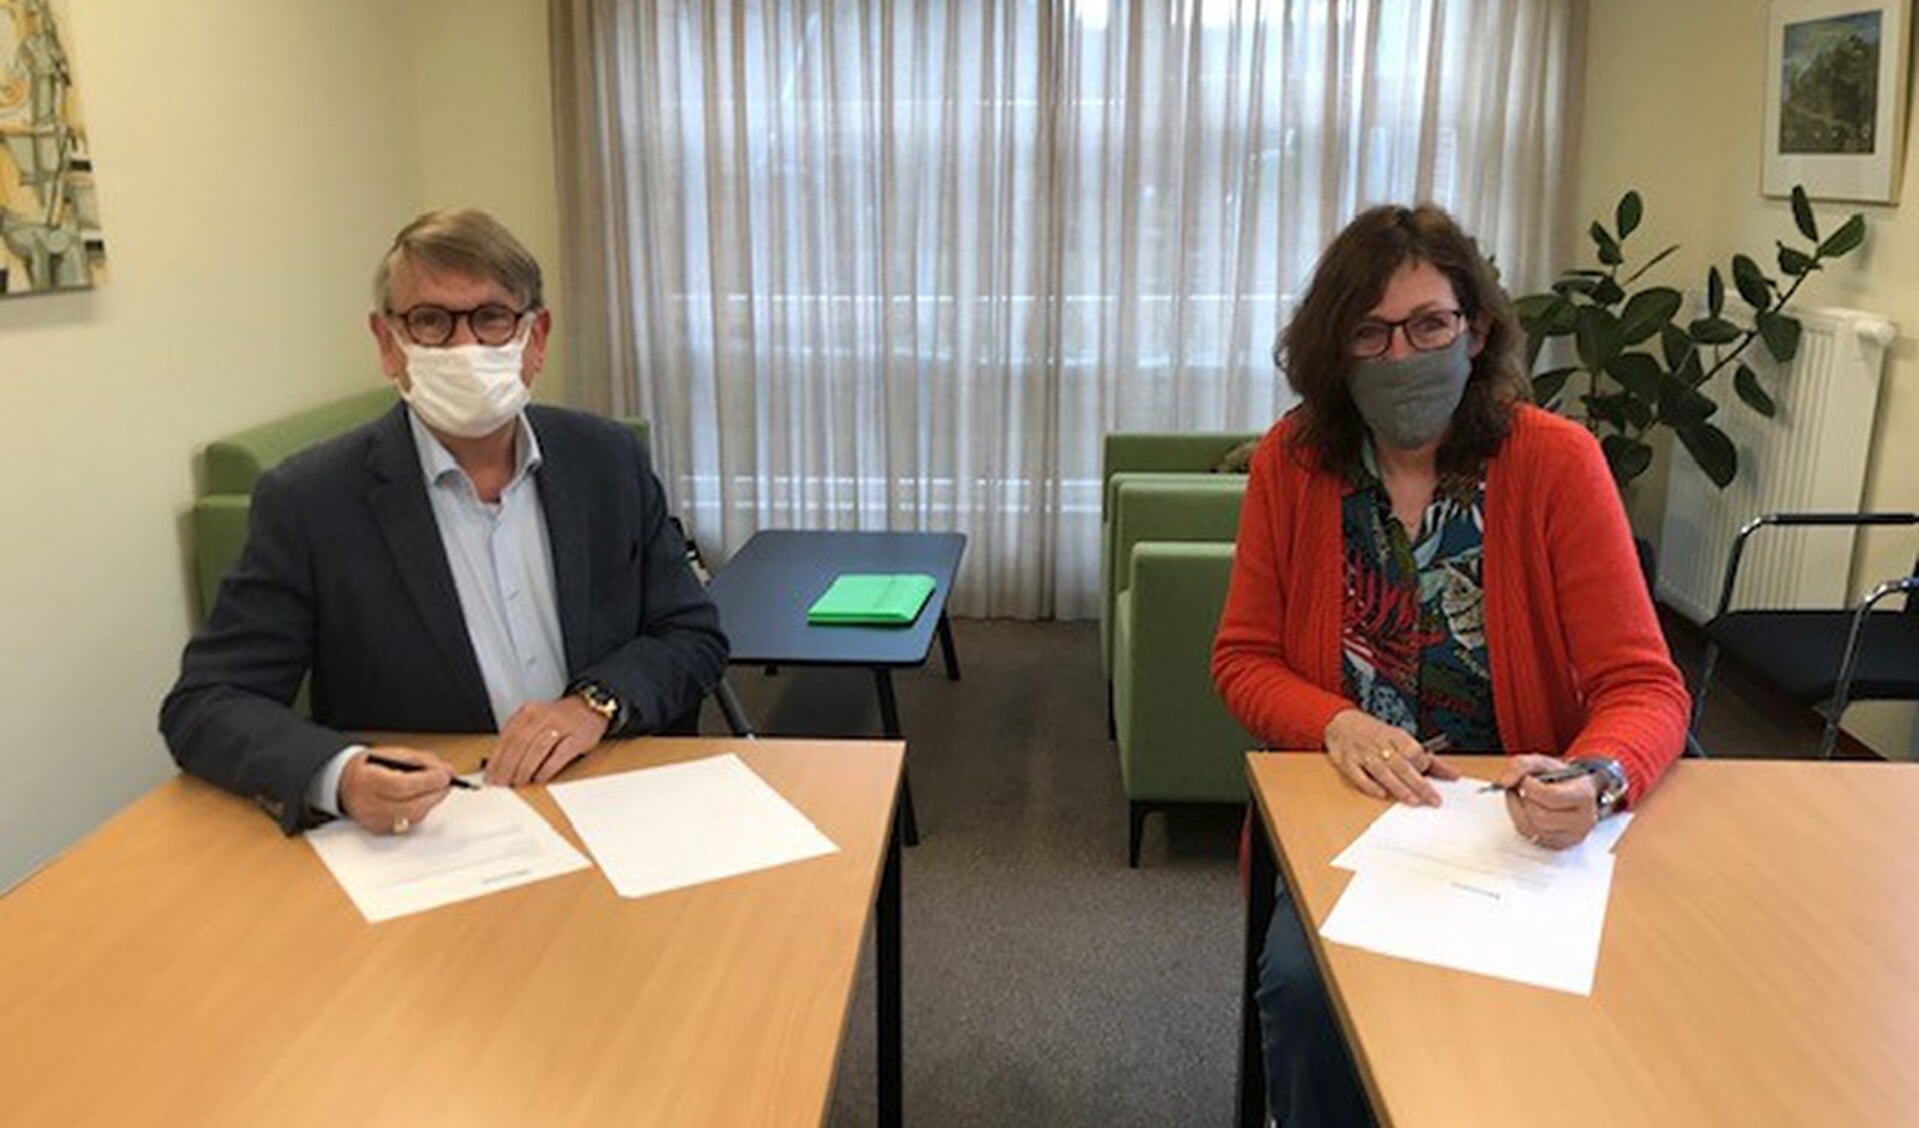 Joke Abbring, nieuwe bestuurder Wonen Vierlingsbeek. Links: Paul Nouwen, voorzitter RvC.